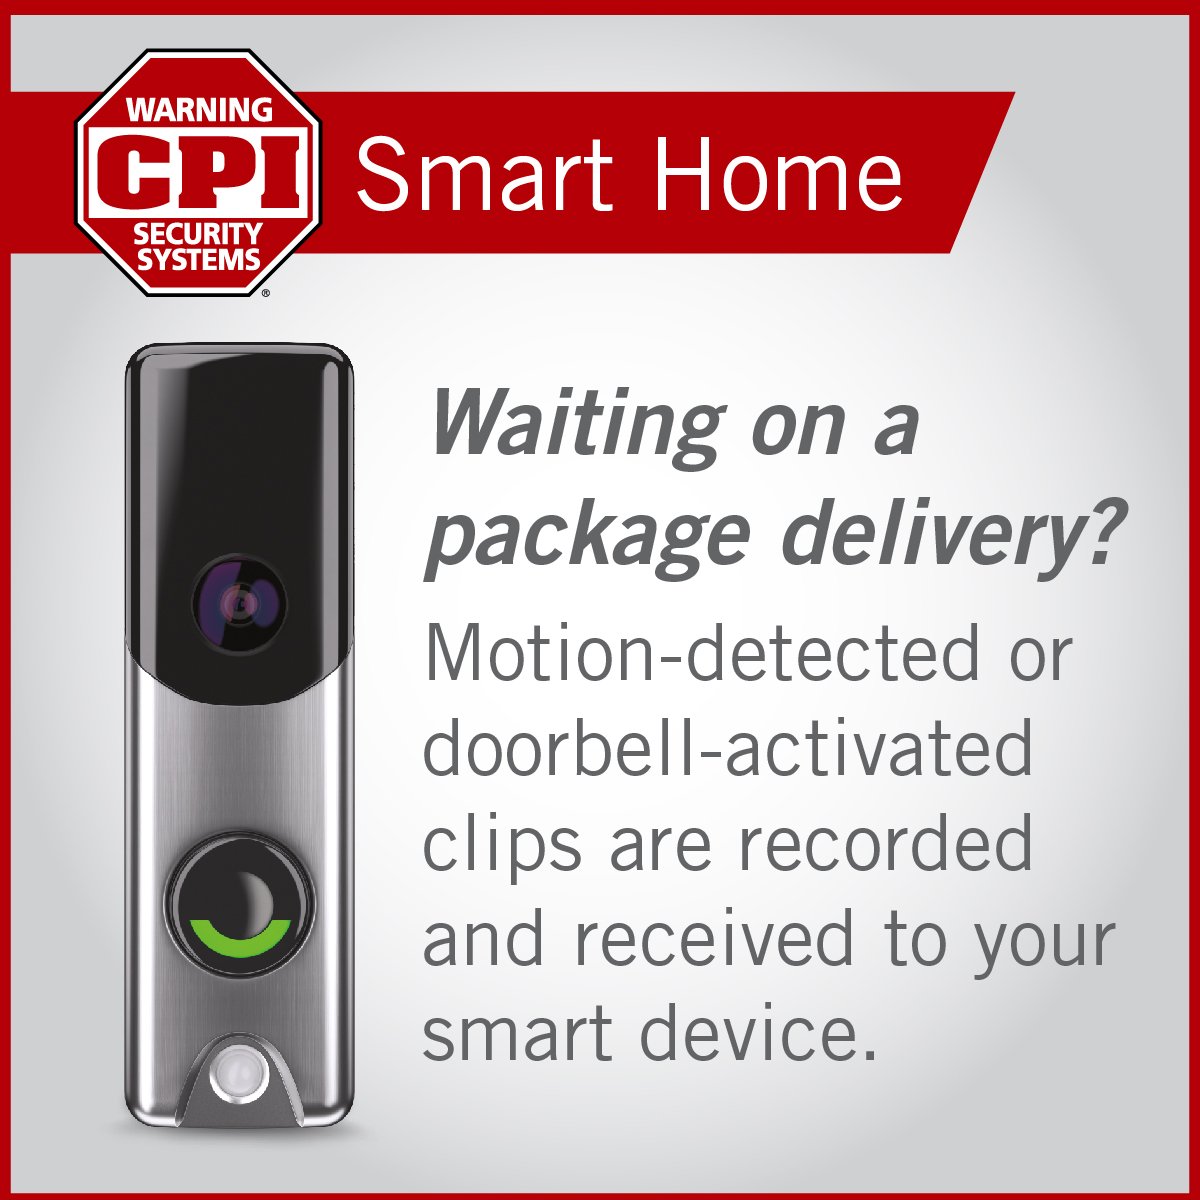 intouch doorbell camera